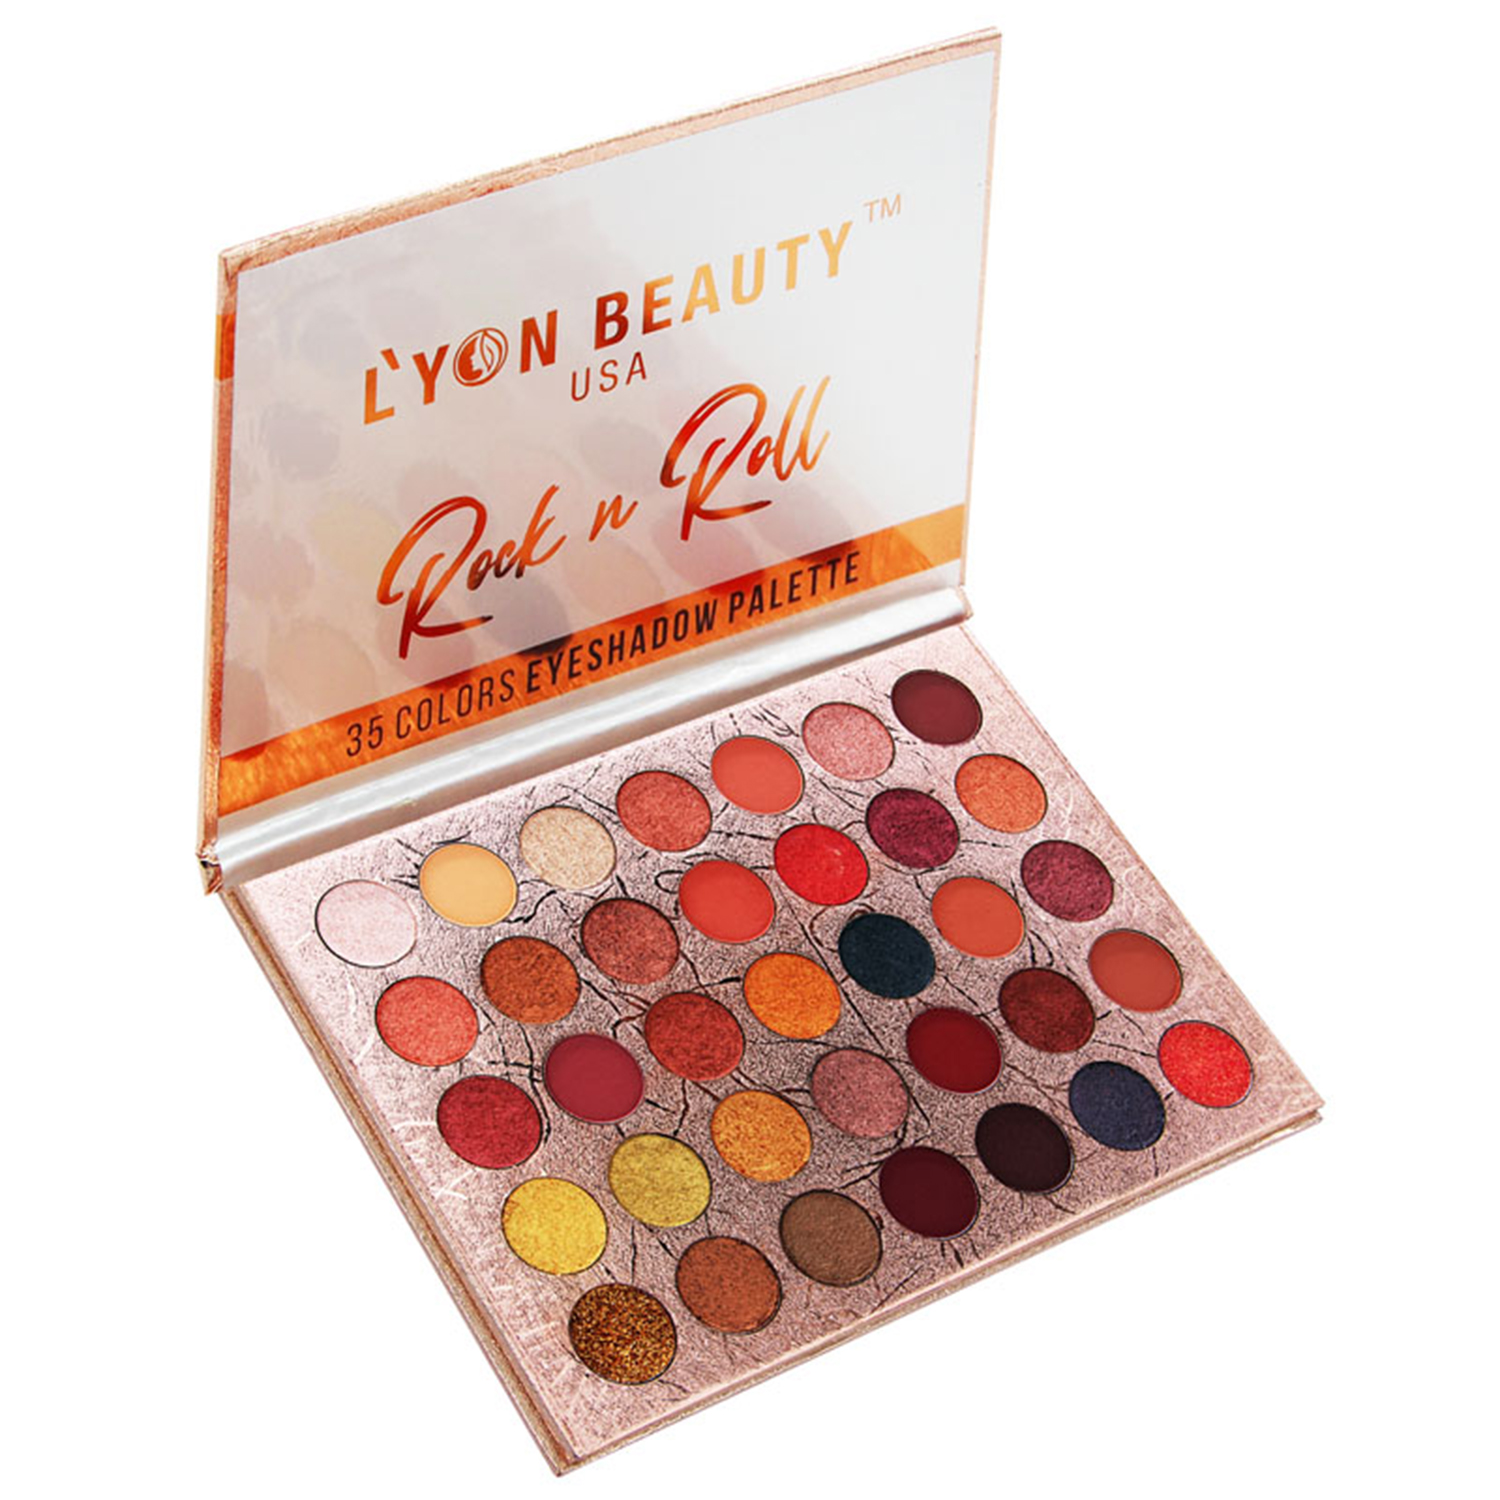 Lyon Beauty USA Rock N Roll 35 Colors Eyeshadow Palette, 1gm-Shade 03